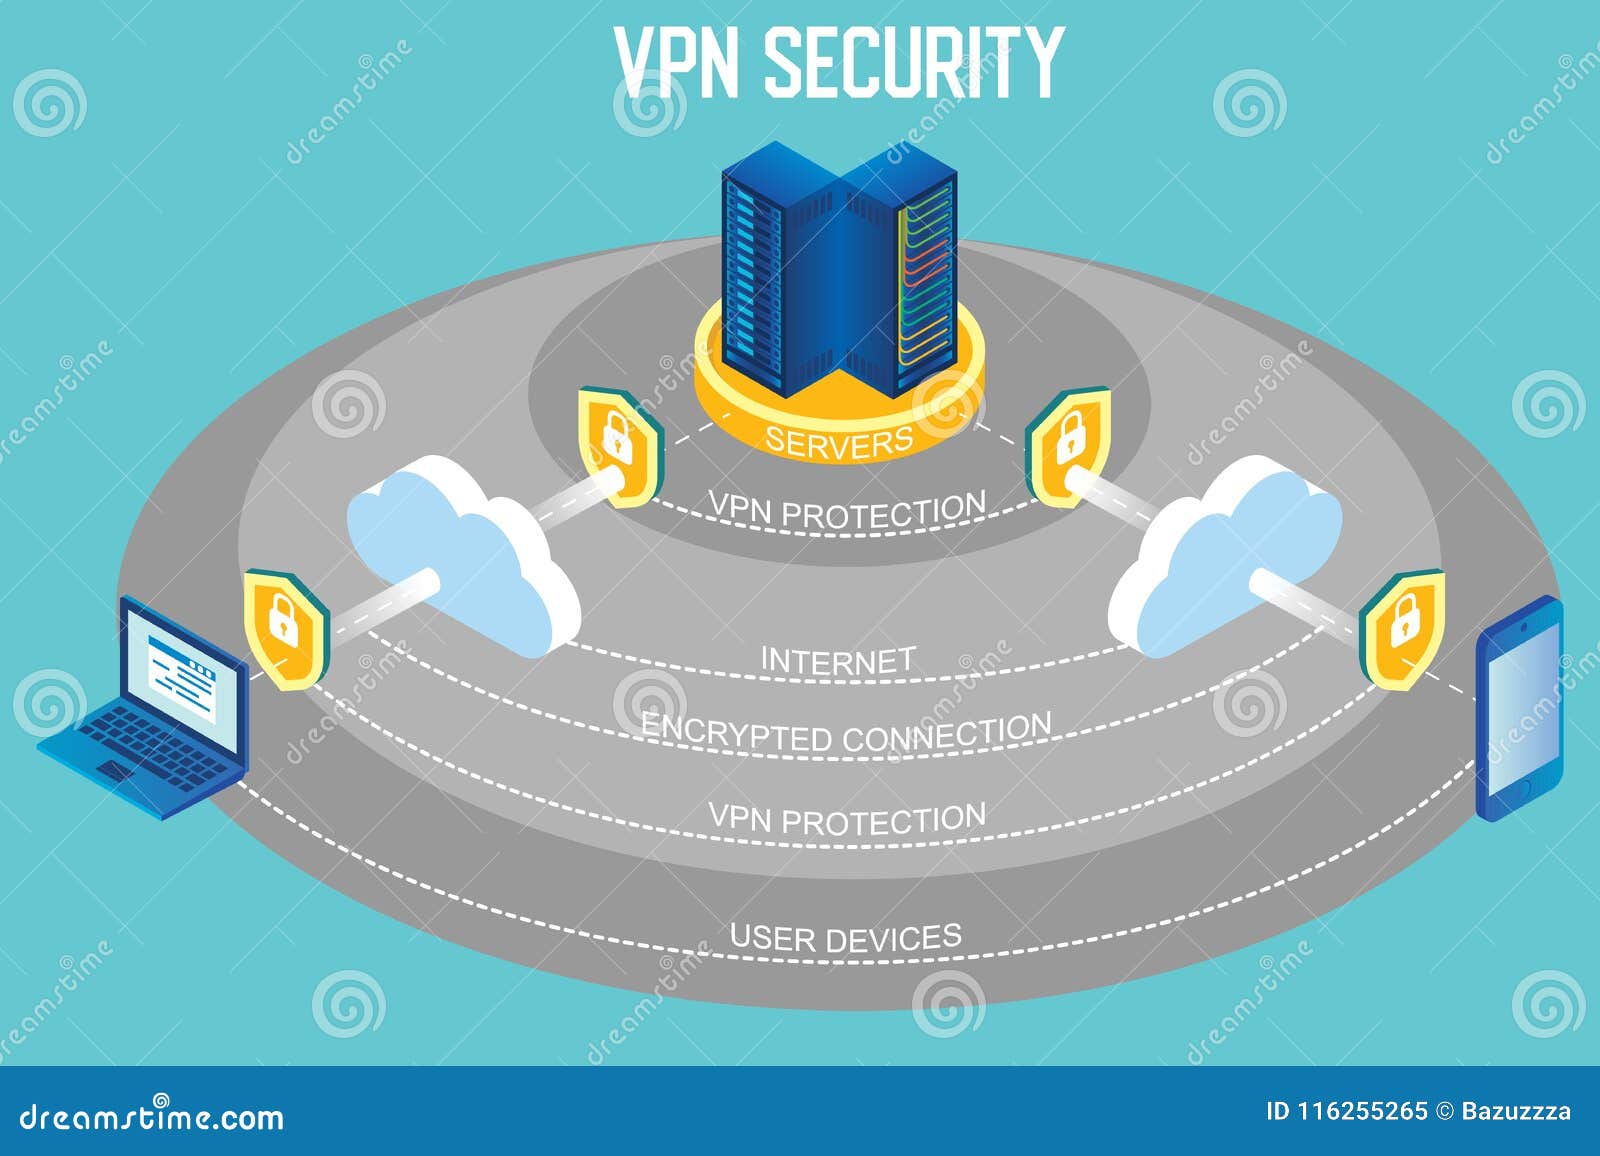 vpn security  isometric infographic